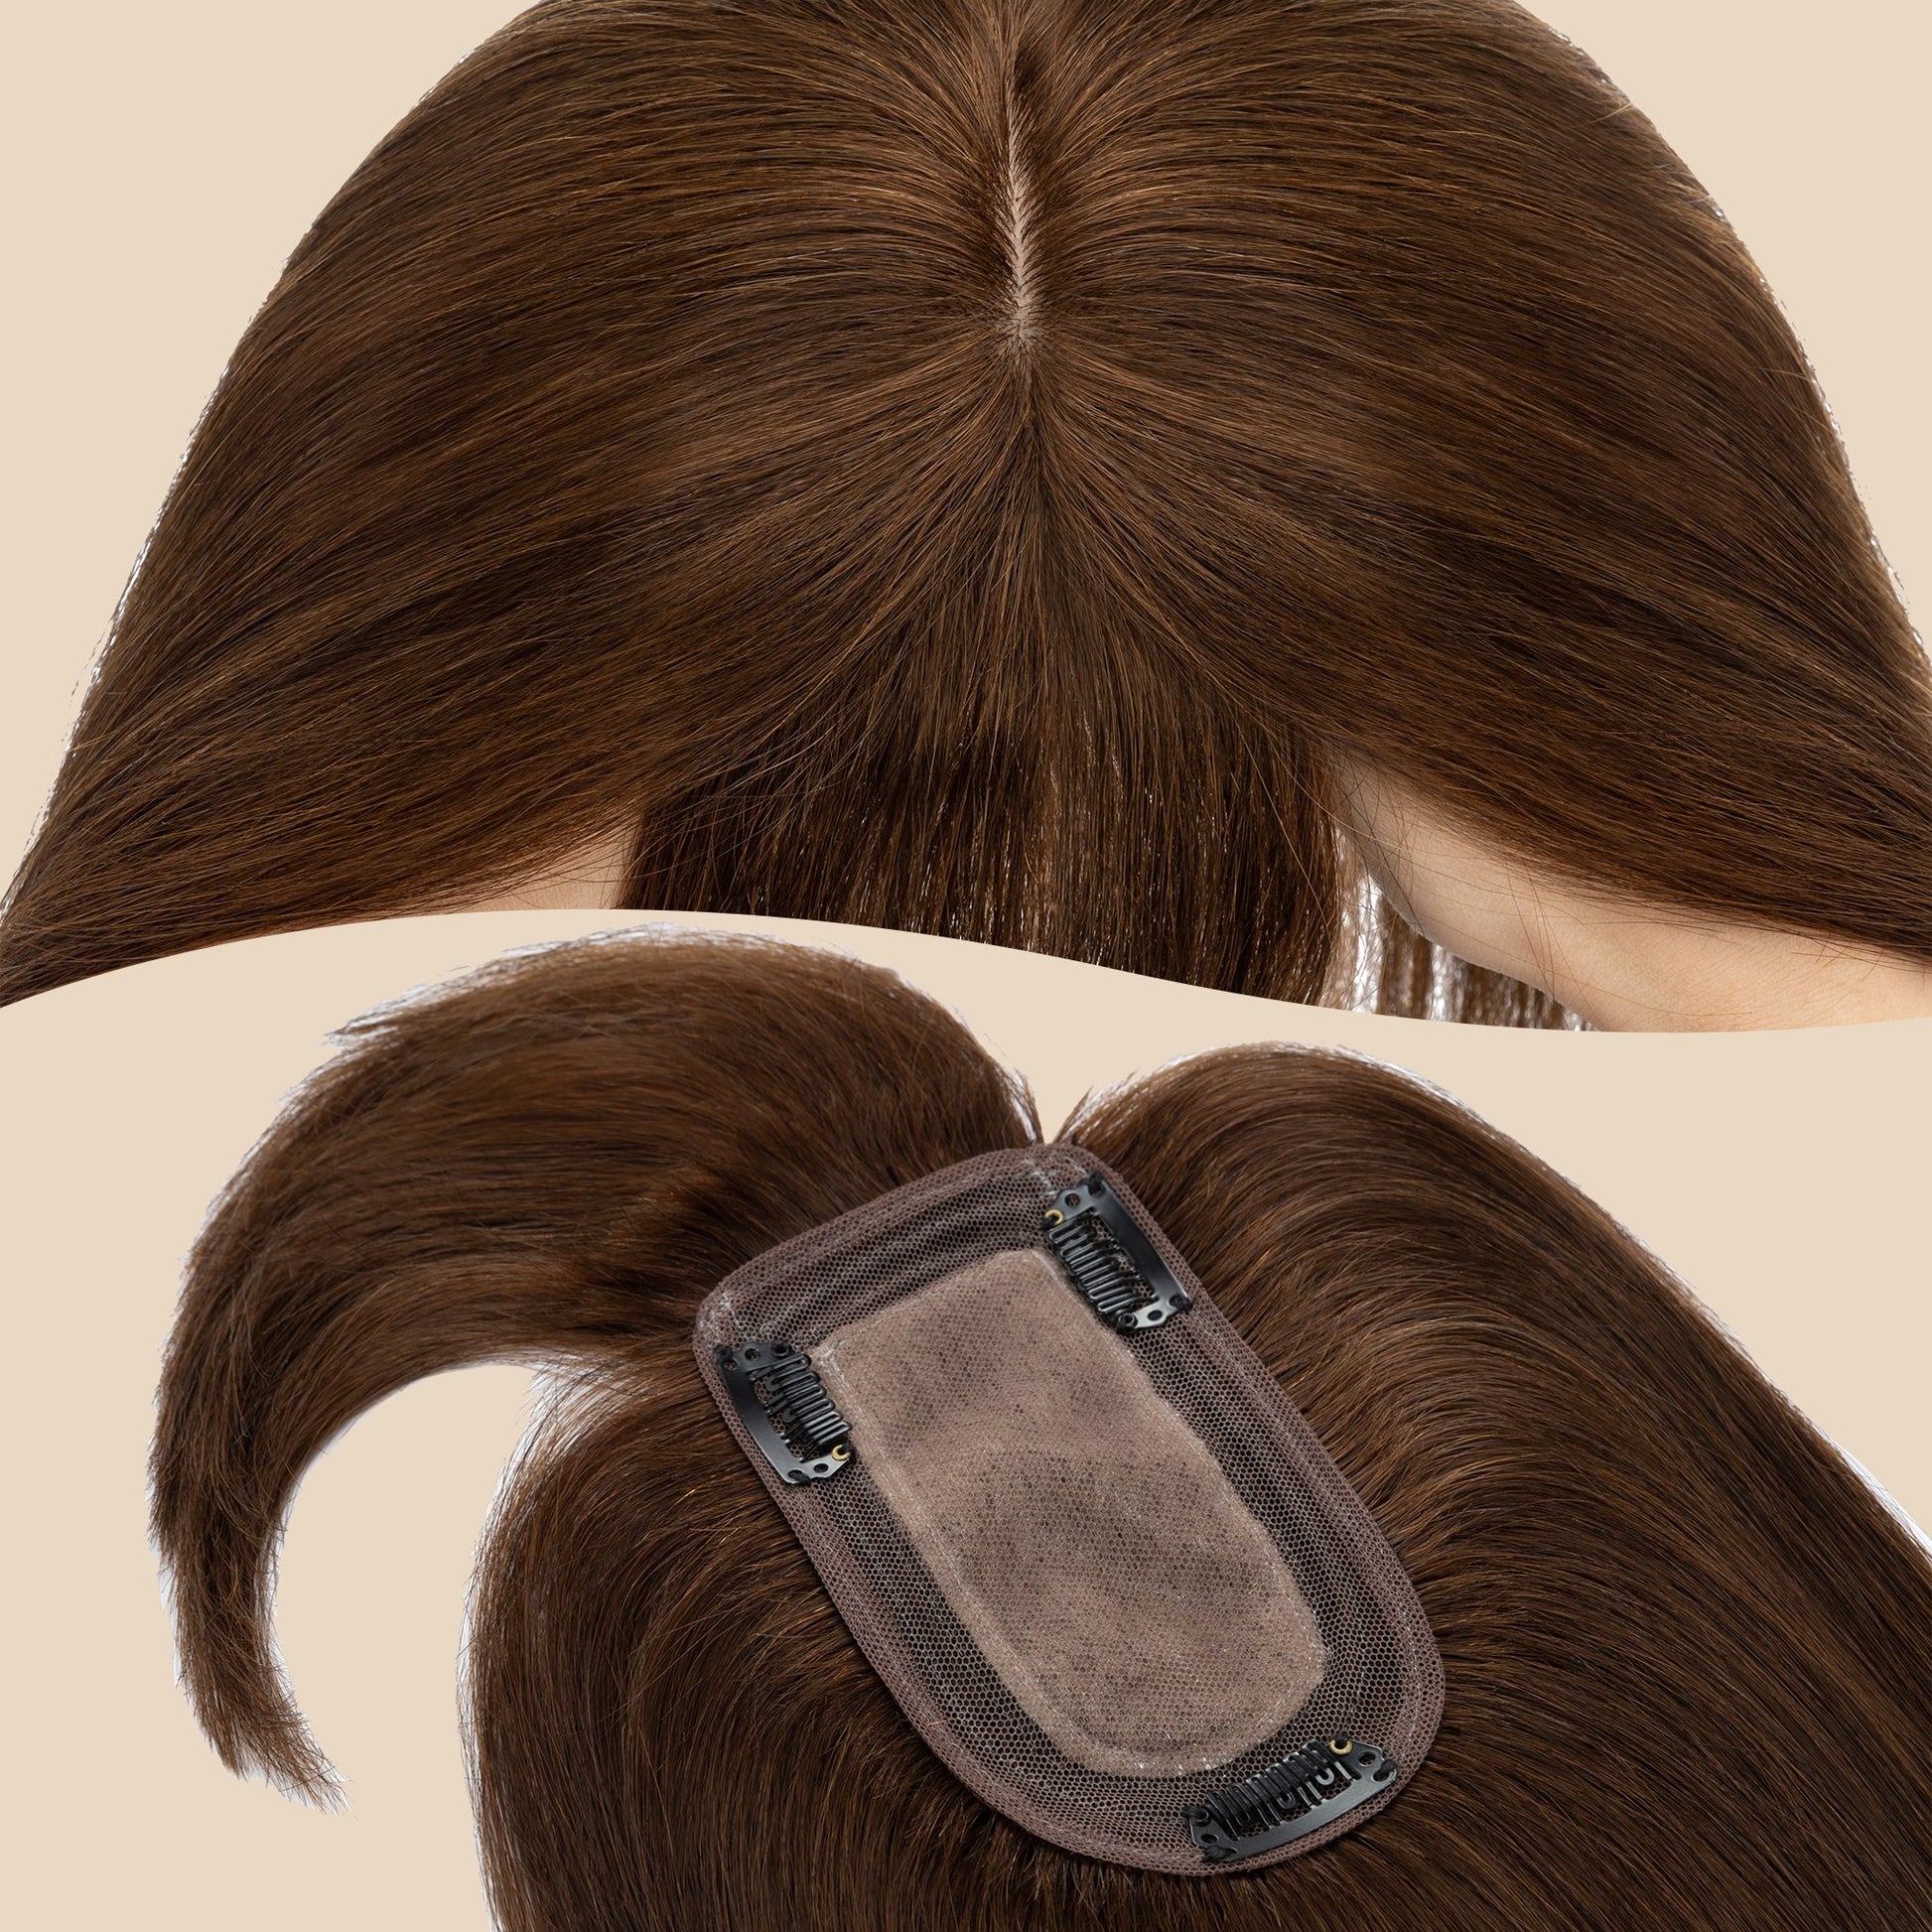 3x5" Bionic Scalp Top Medium Brown Human Hair Topper with Bangs segohair.com